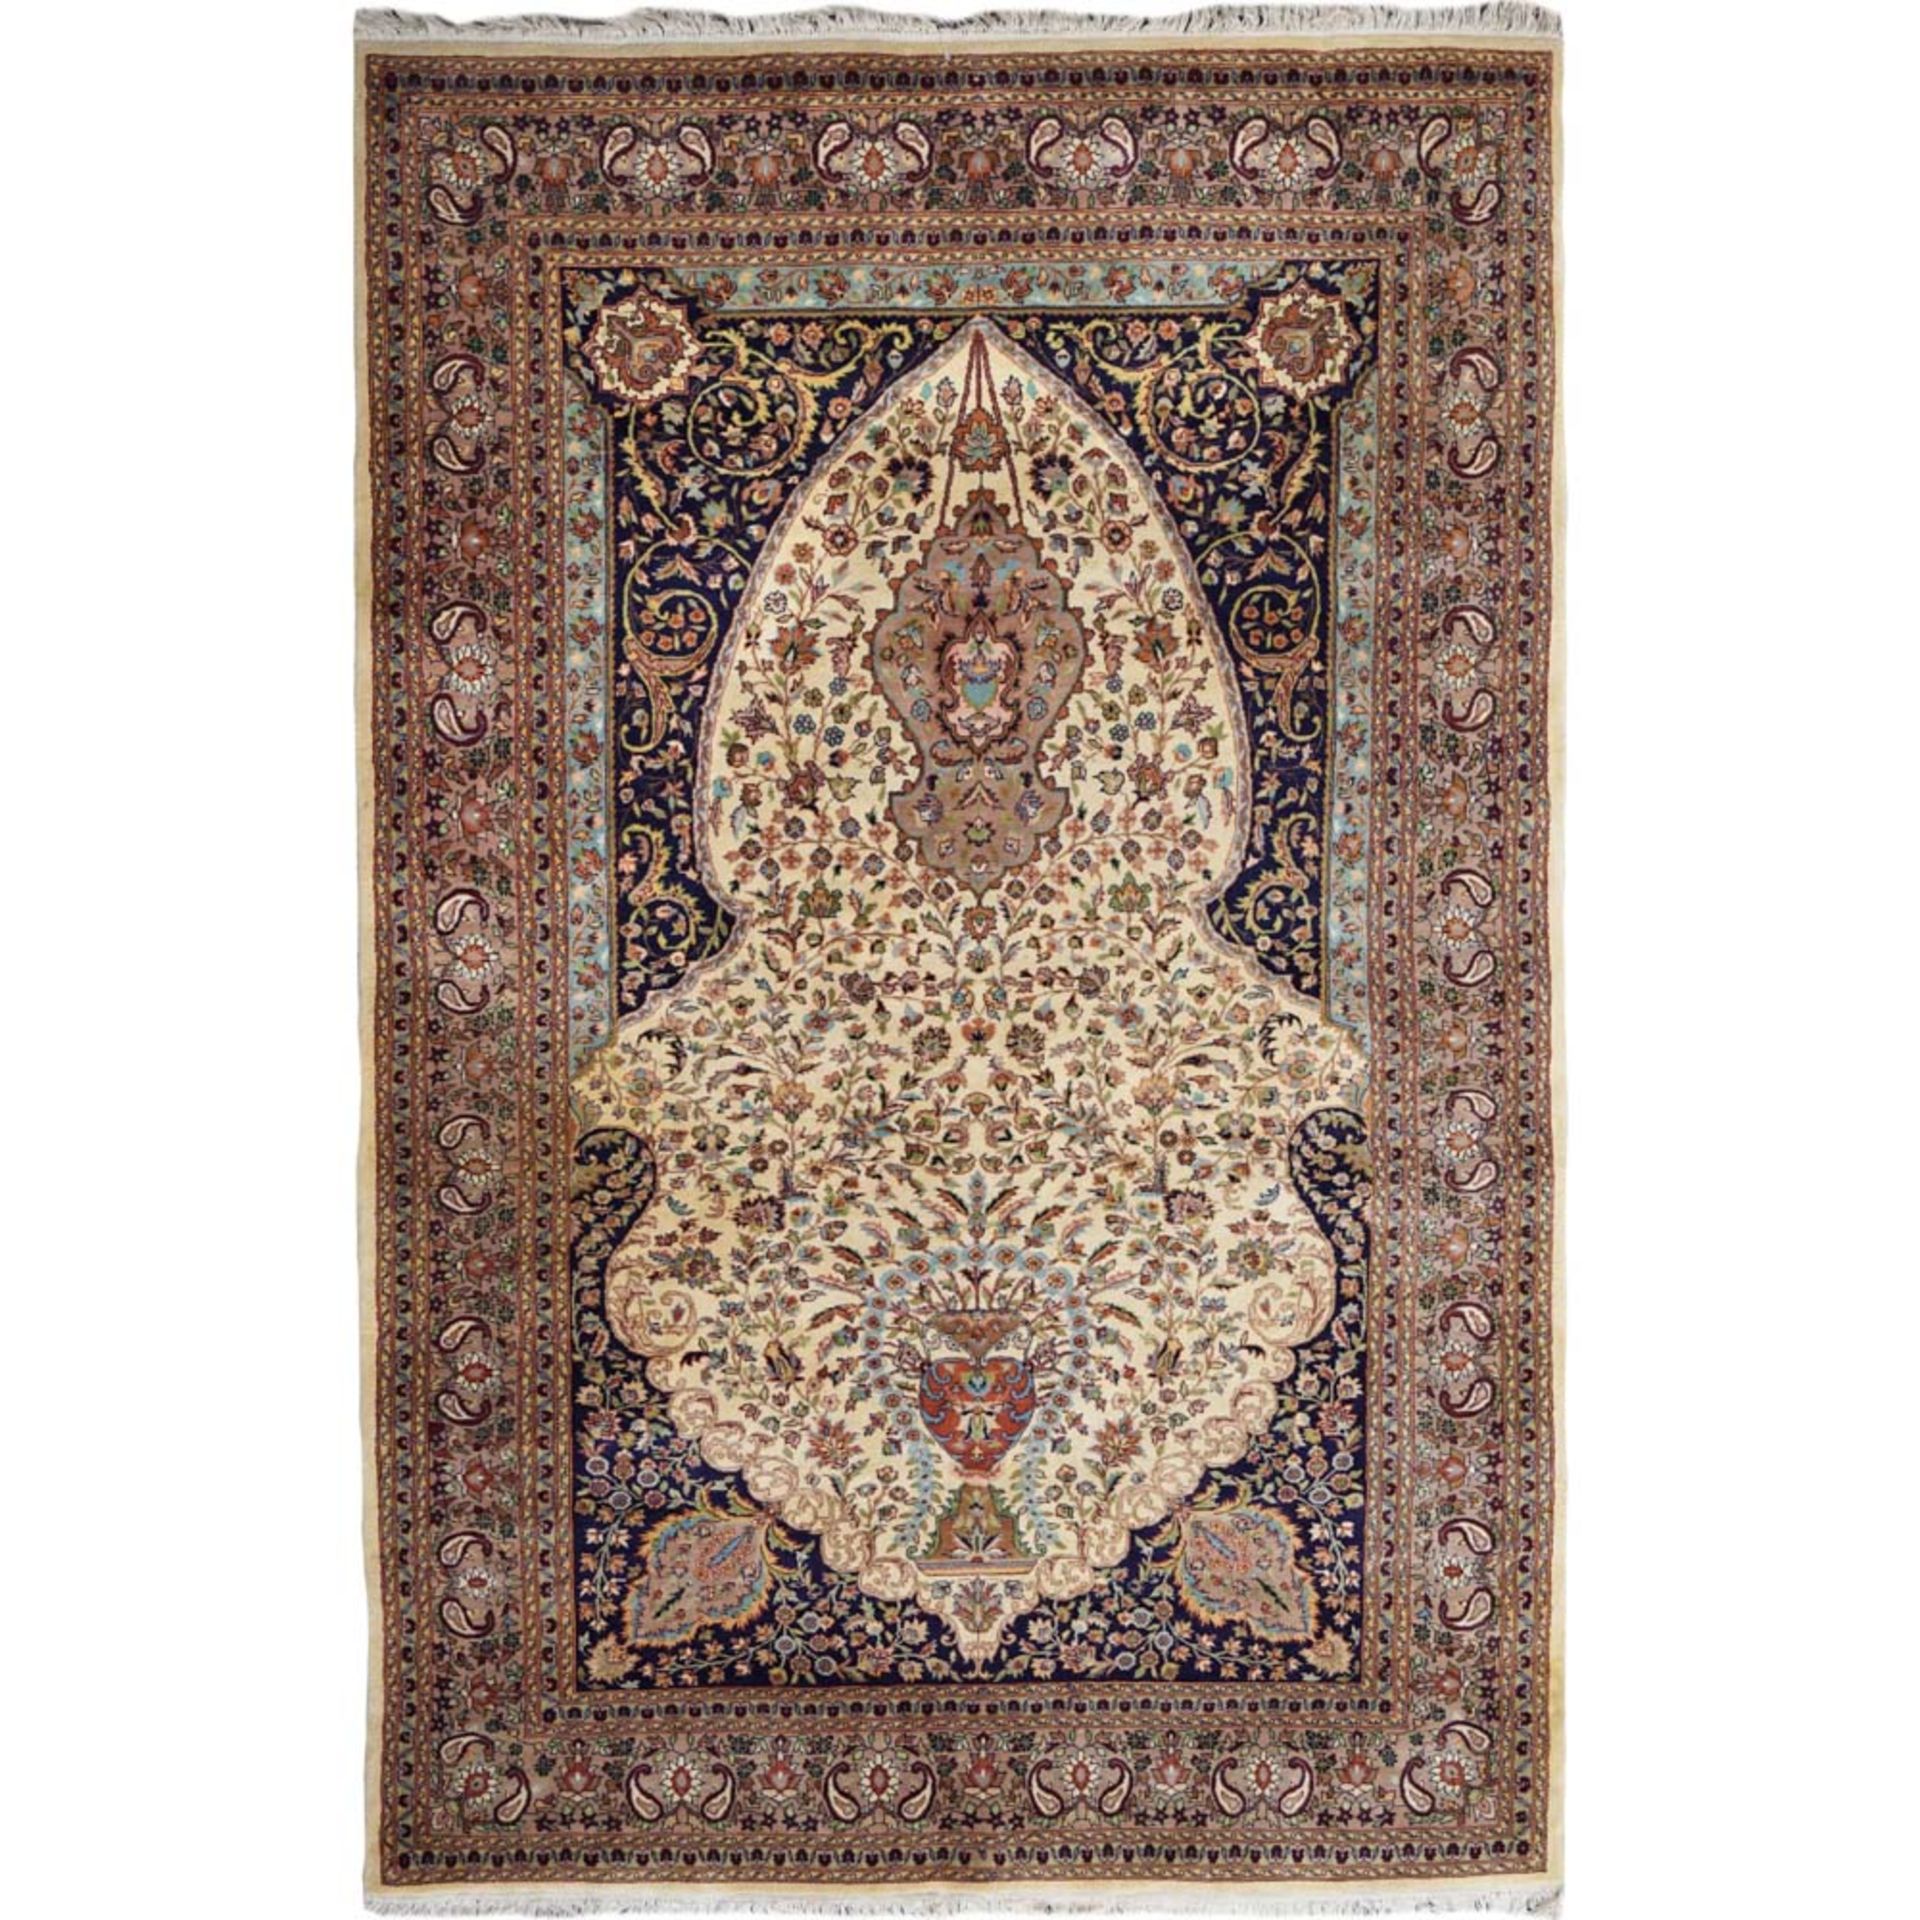 Oriental prayer carpet 20th century 280x185 cm.